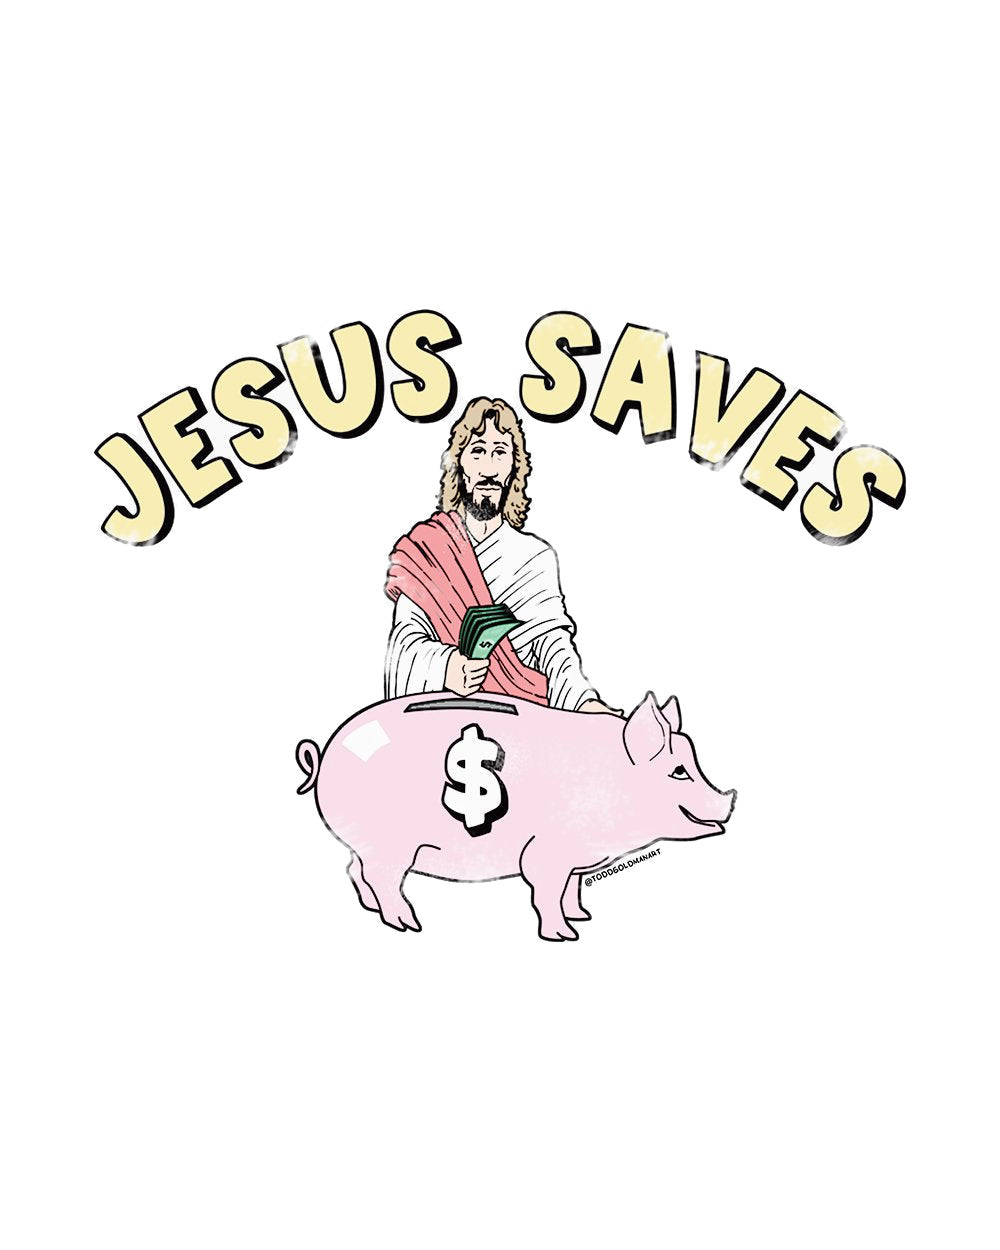 Jesus Saves Money Funny Slogan Saying Religion Christianity Parody Cotton T-Shirt